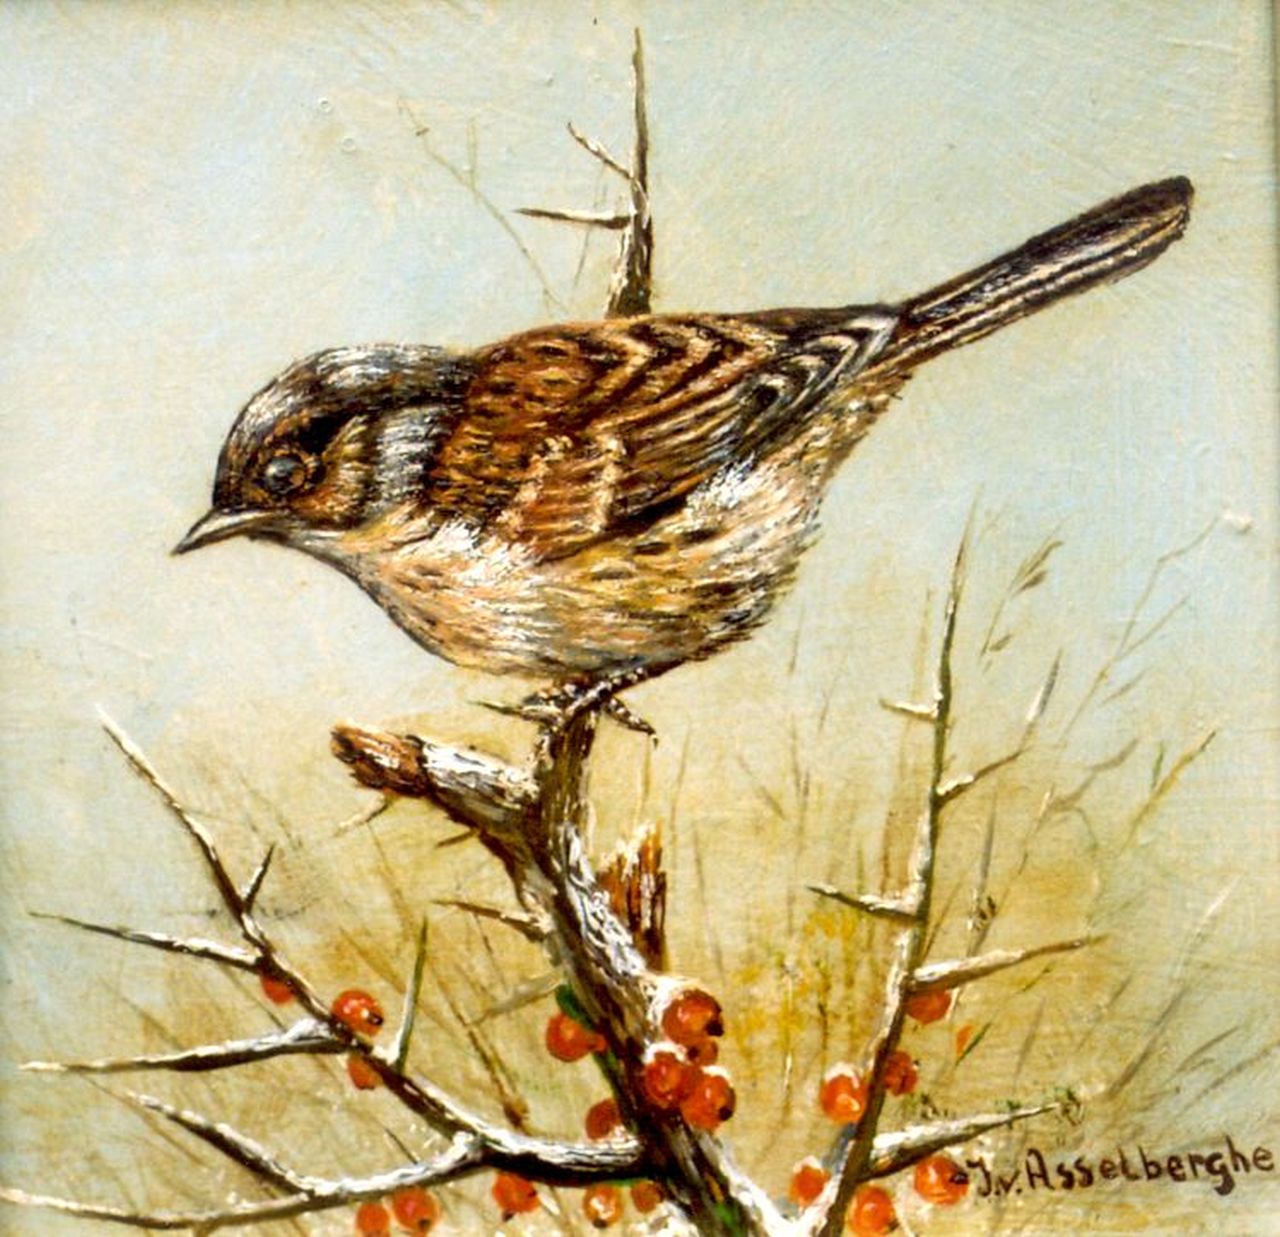 Asselberghe J. van | van Asselberghe, A hedge sparrow, oil on panel 13.0 x 13.0 cm, signed l.r.